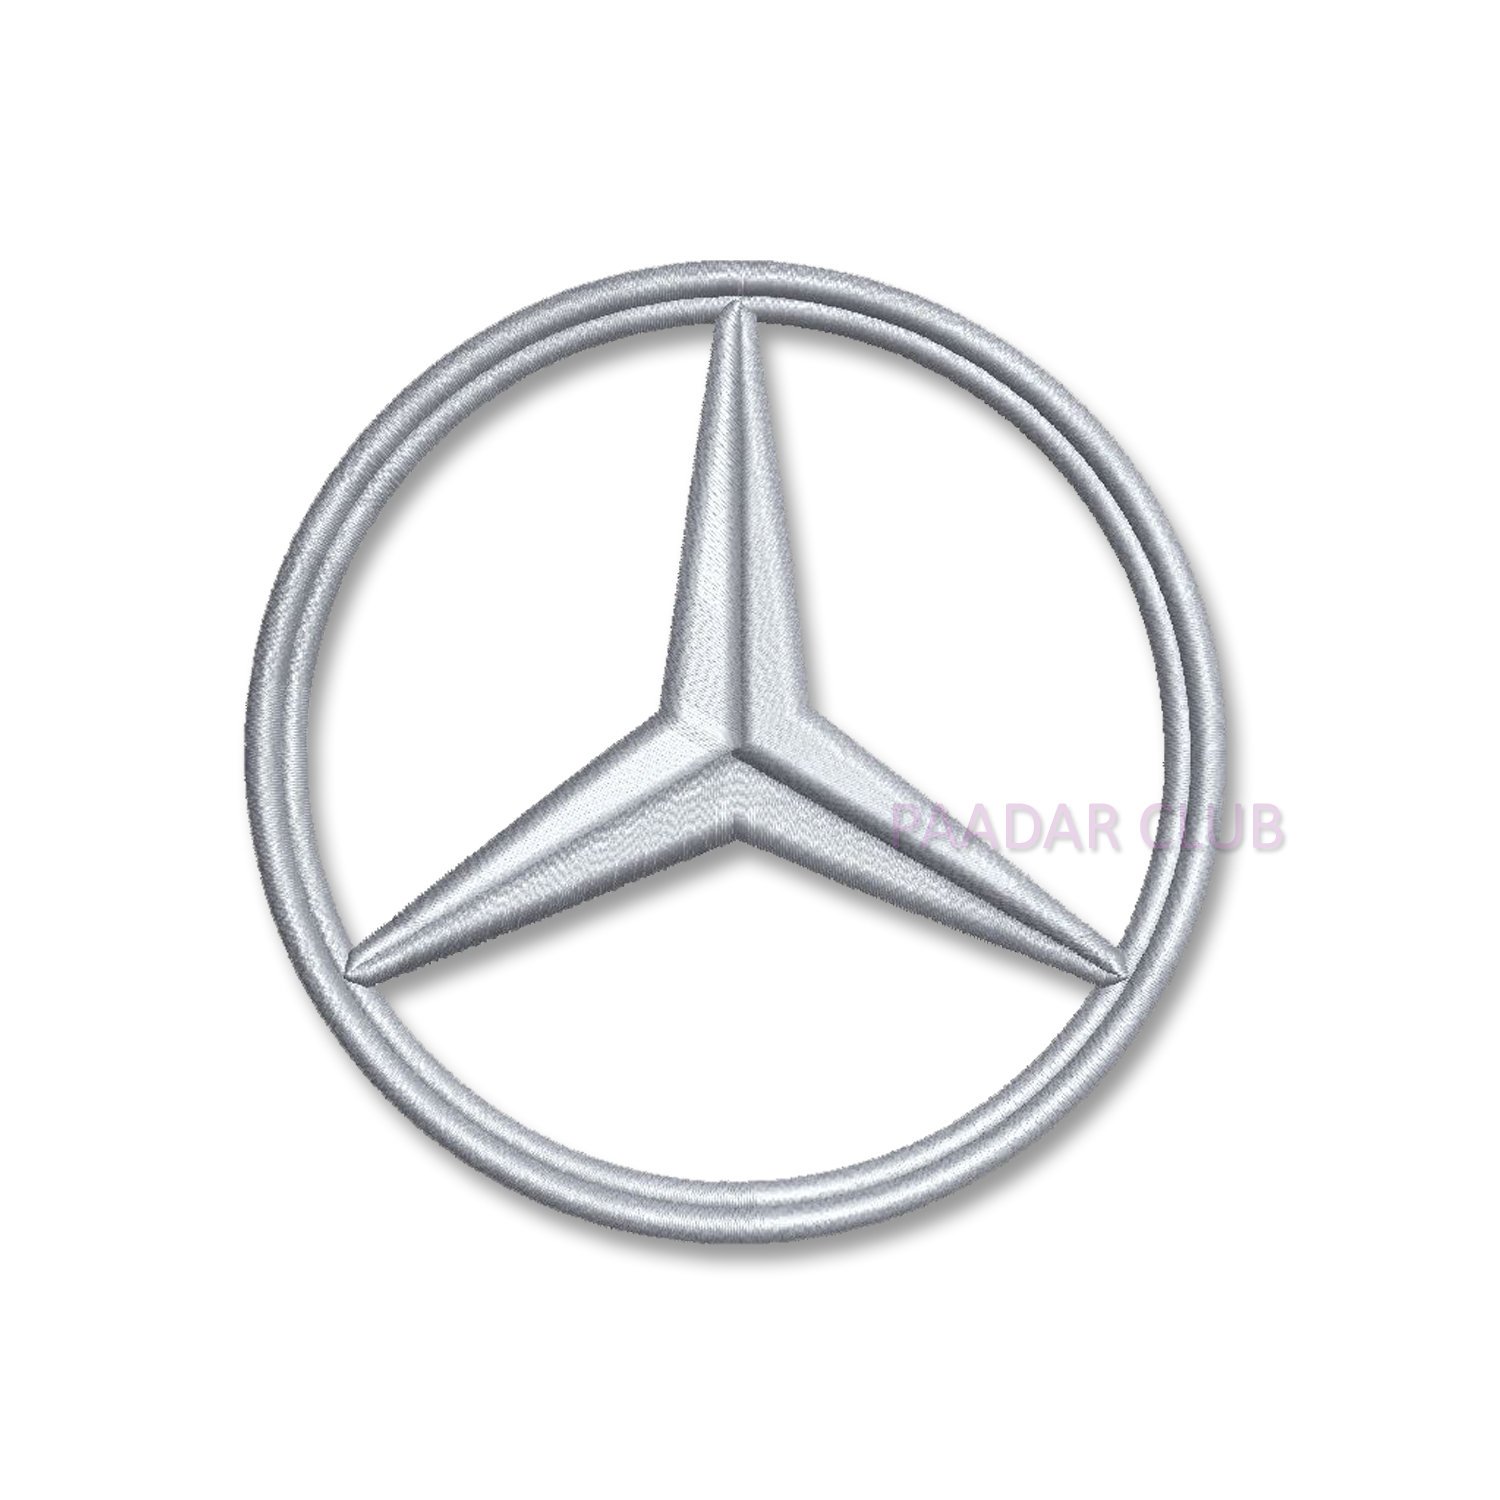 paadarclub on X: MERCEDES BENZ Car Logo Embroidery Design, Mercedes Benz  Brand Logo Machine Embroidery Design, Auto Emblem Embroidery Design   #supplies #kidscrafts #mercedesbenz  #mercedesbenzlogo #mercedesben